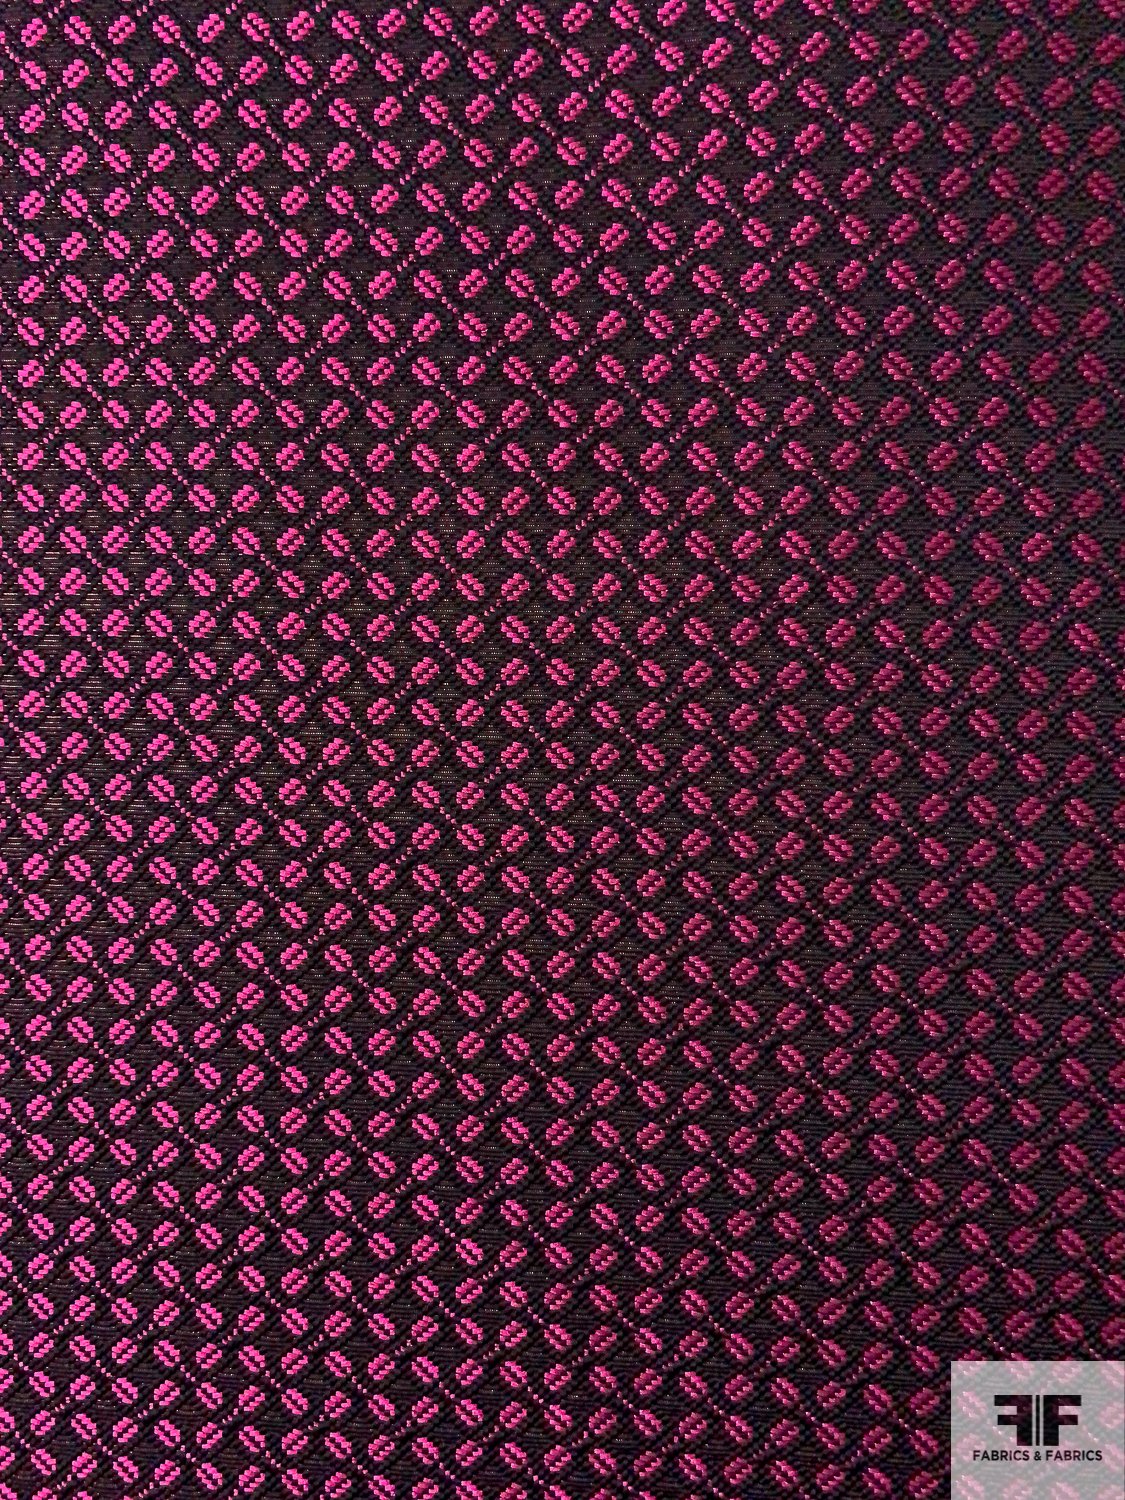 Made in Spain Diagonal Basketweave Brocade - Hot Pink / Black